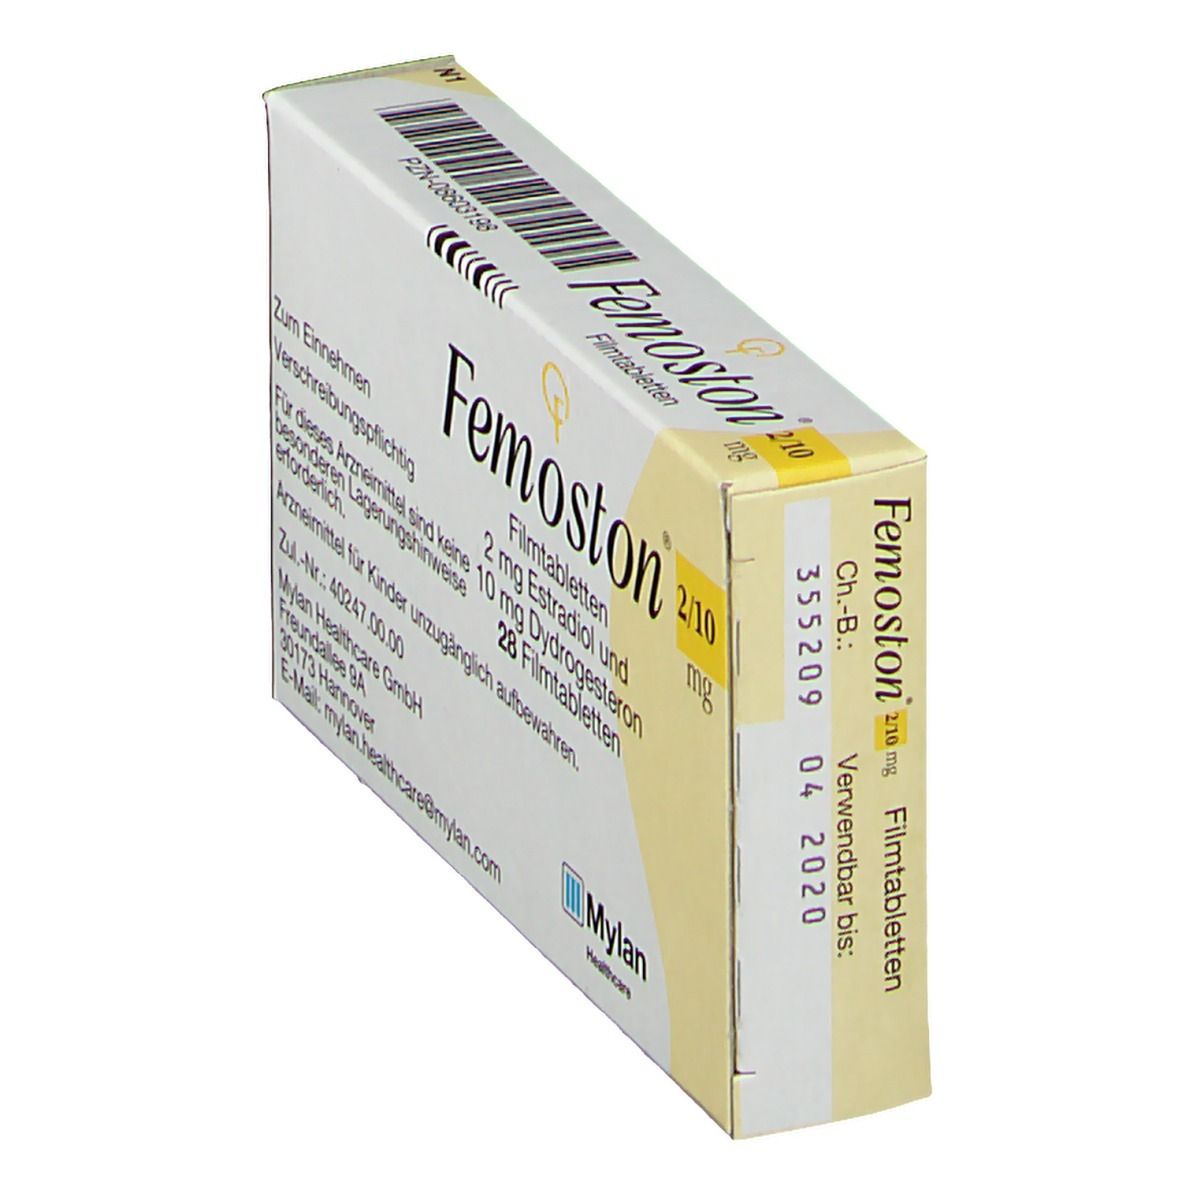 Femoston® 2/10 mg